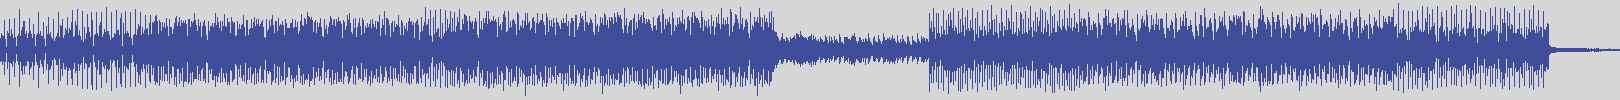 nf_boyz_records [NFY071] Bank Of Sound - Black Butterfly [Infinity Mix] audio wave form